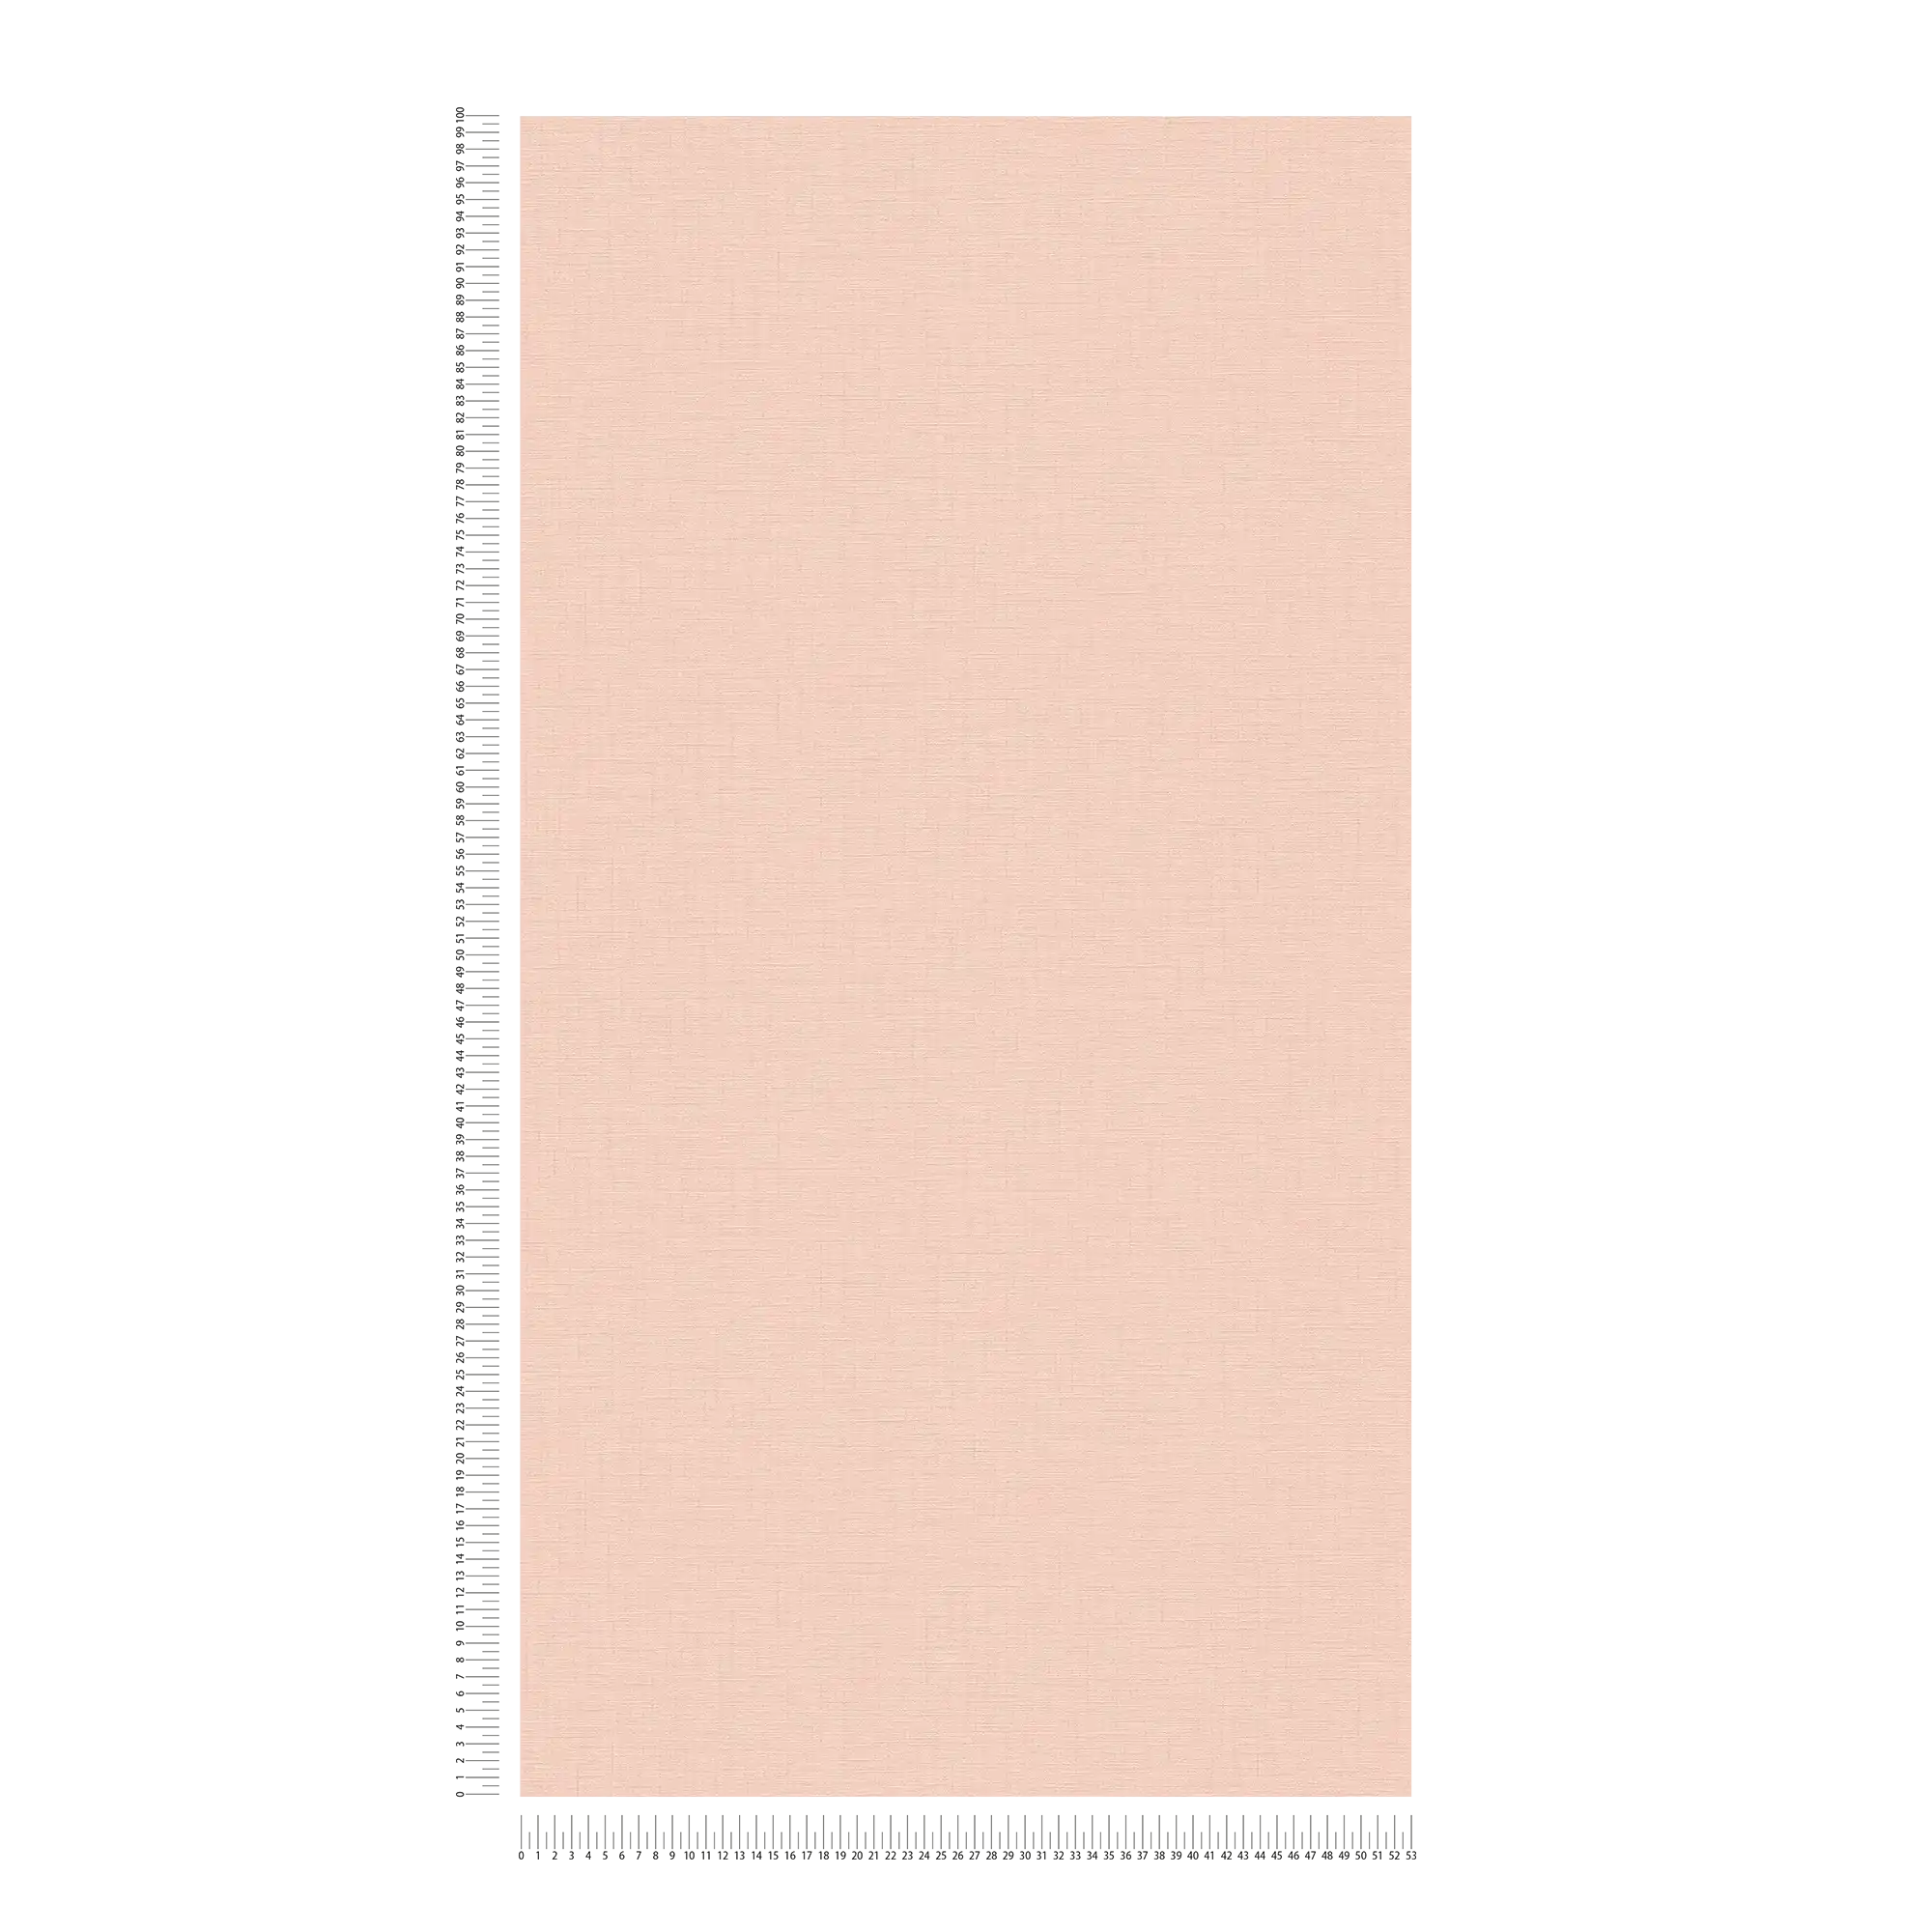             Pale pink wallpaper plain with linen texture - pink
        